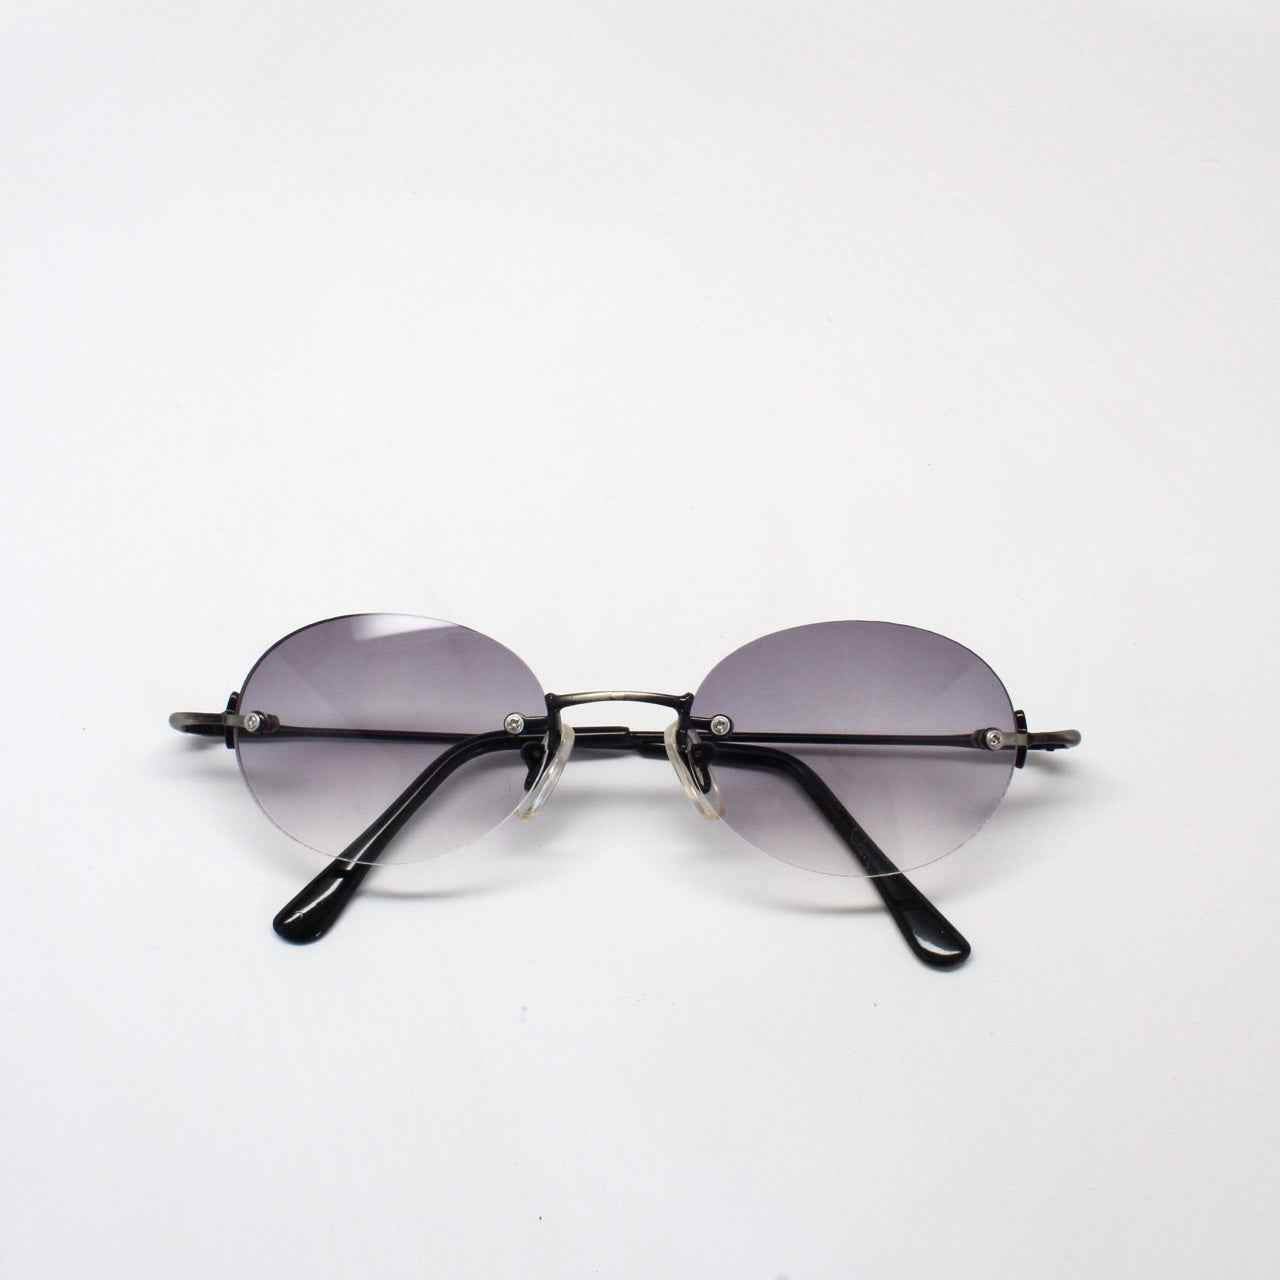 Vintage Small Size 1998 Rimless Oval Sunglasses - Black